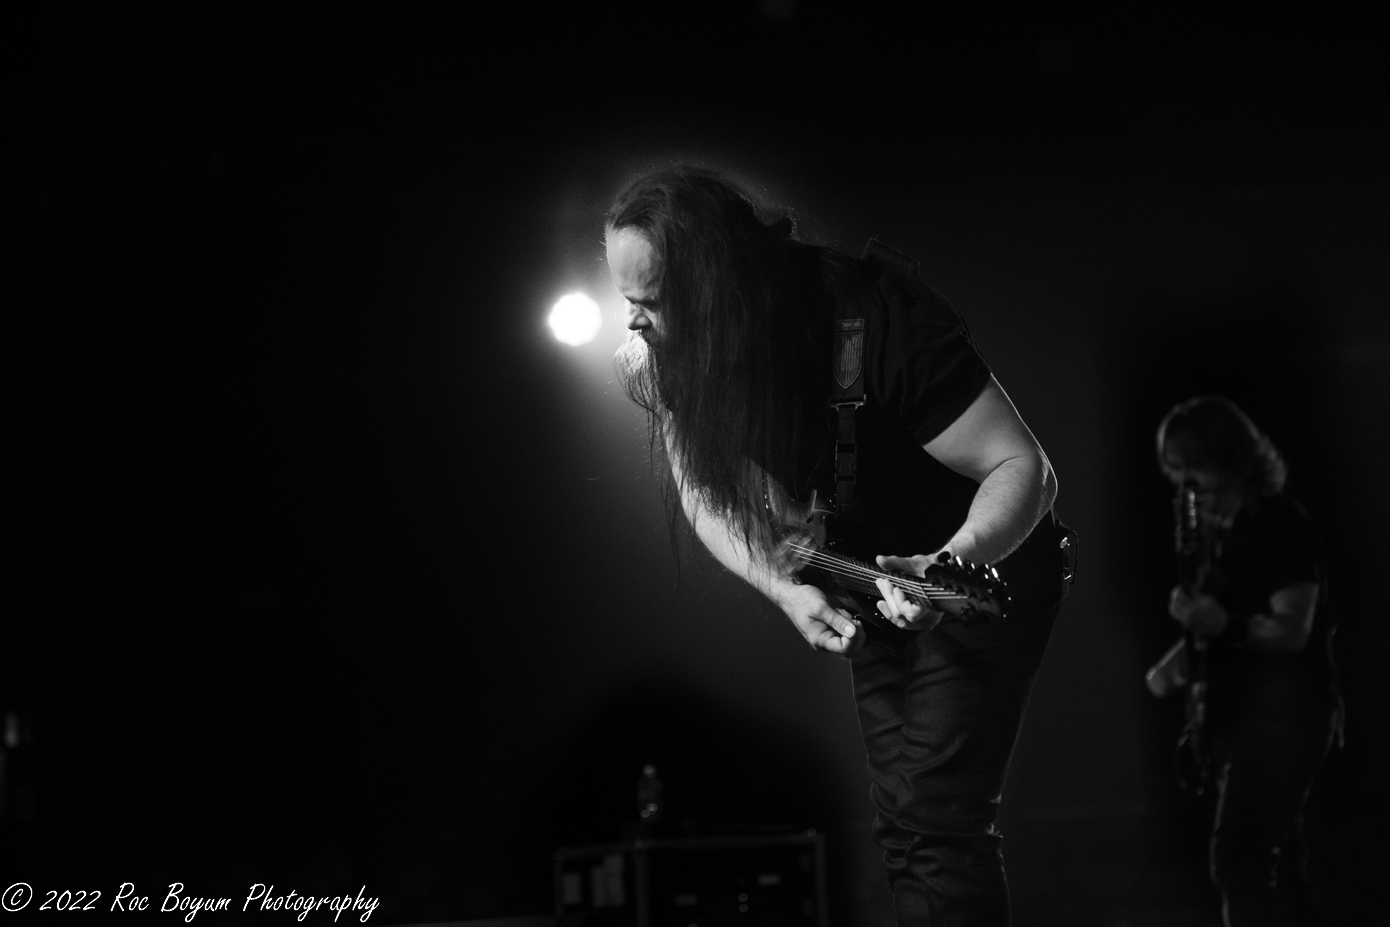 John Petrucci Photo Gallery Celebrity Theater Phoenix AZ